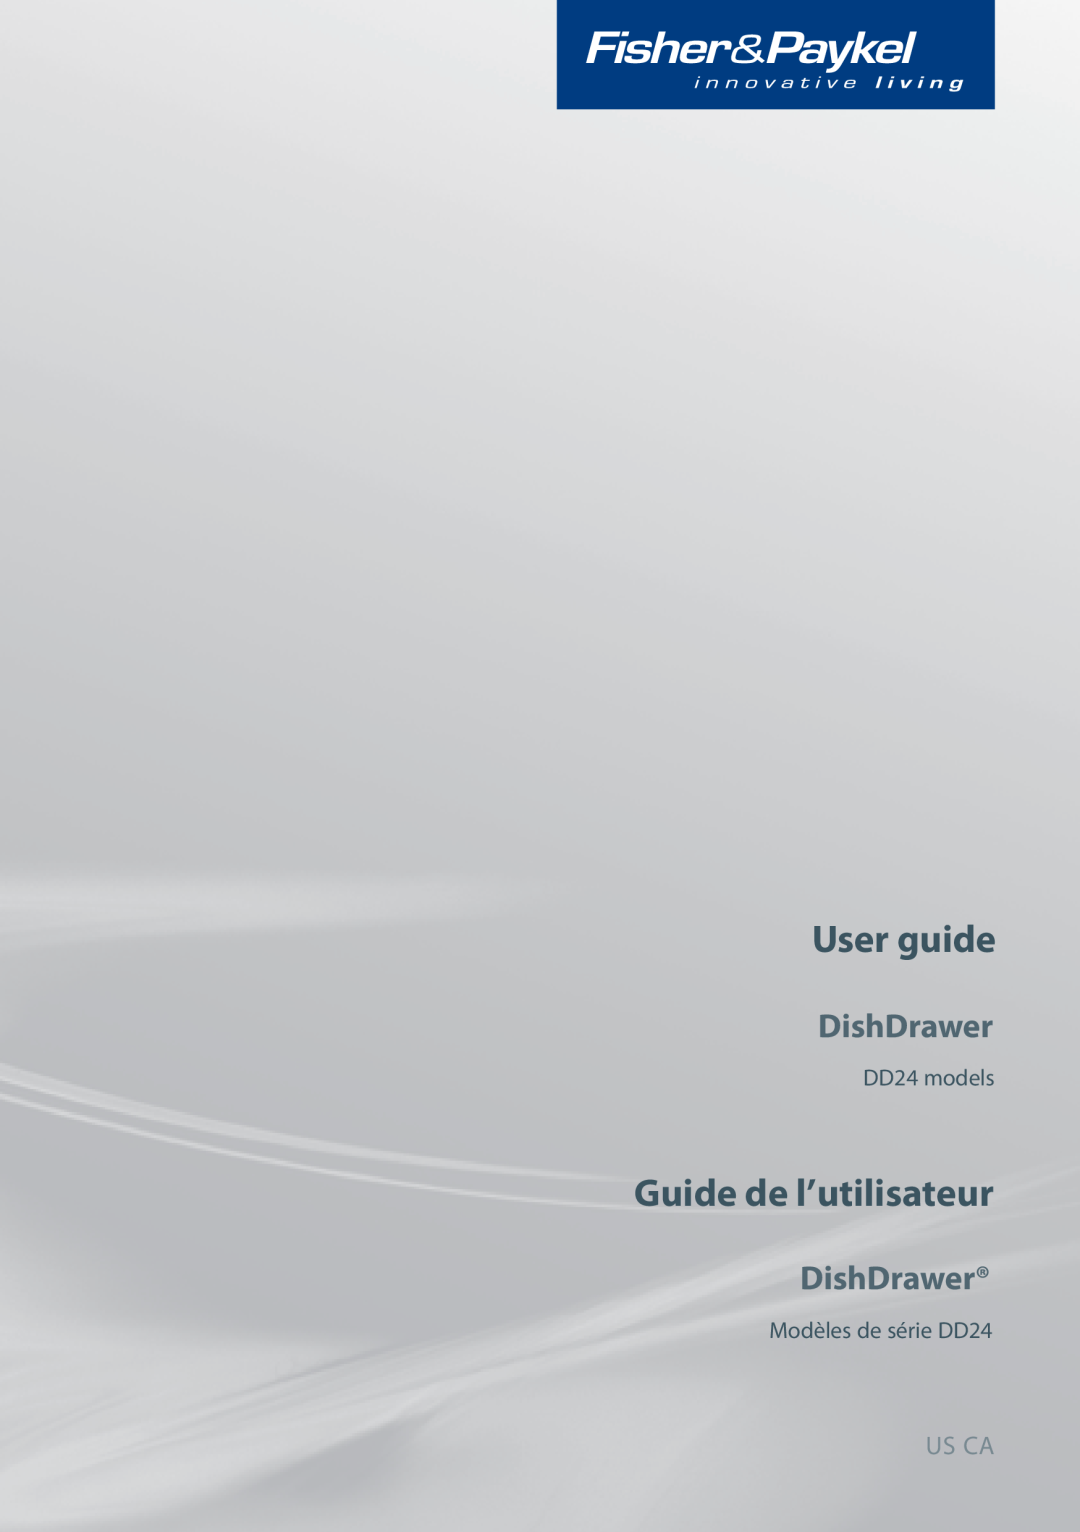 Fisher & Paykel DD24 manual User guide, Guide de l’utilisateur, DishDrawer, Us Ca 